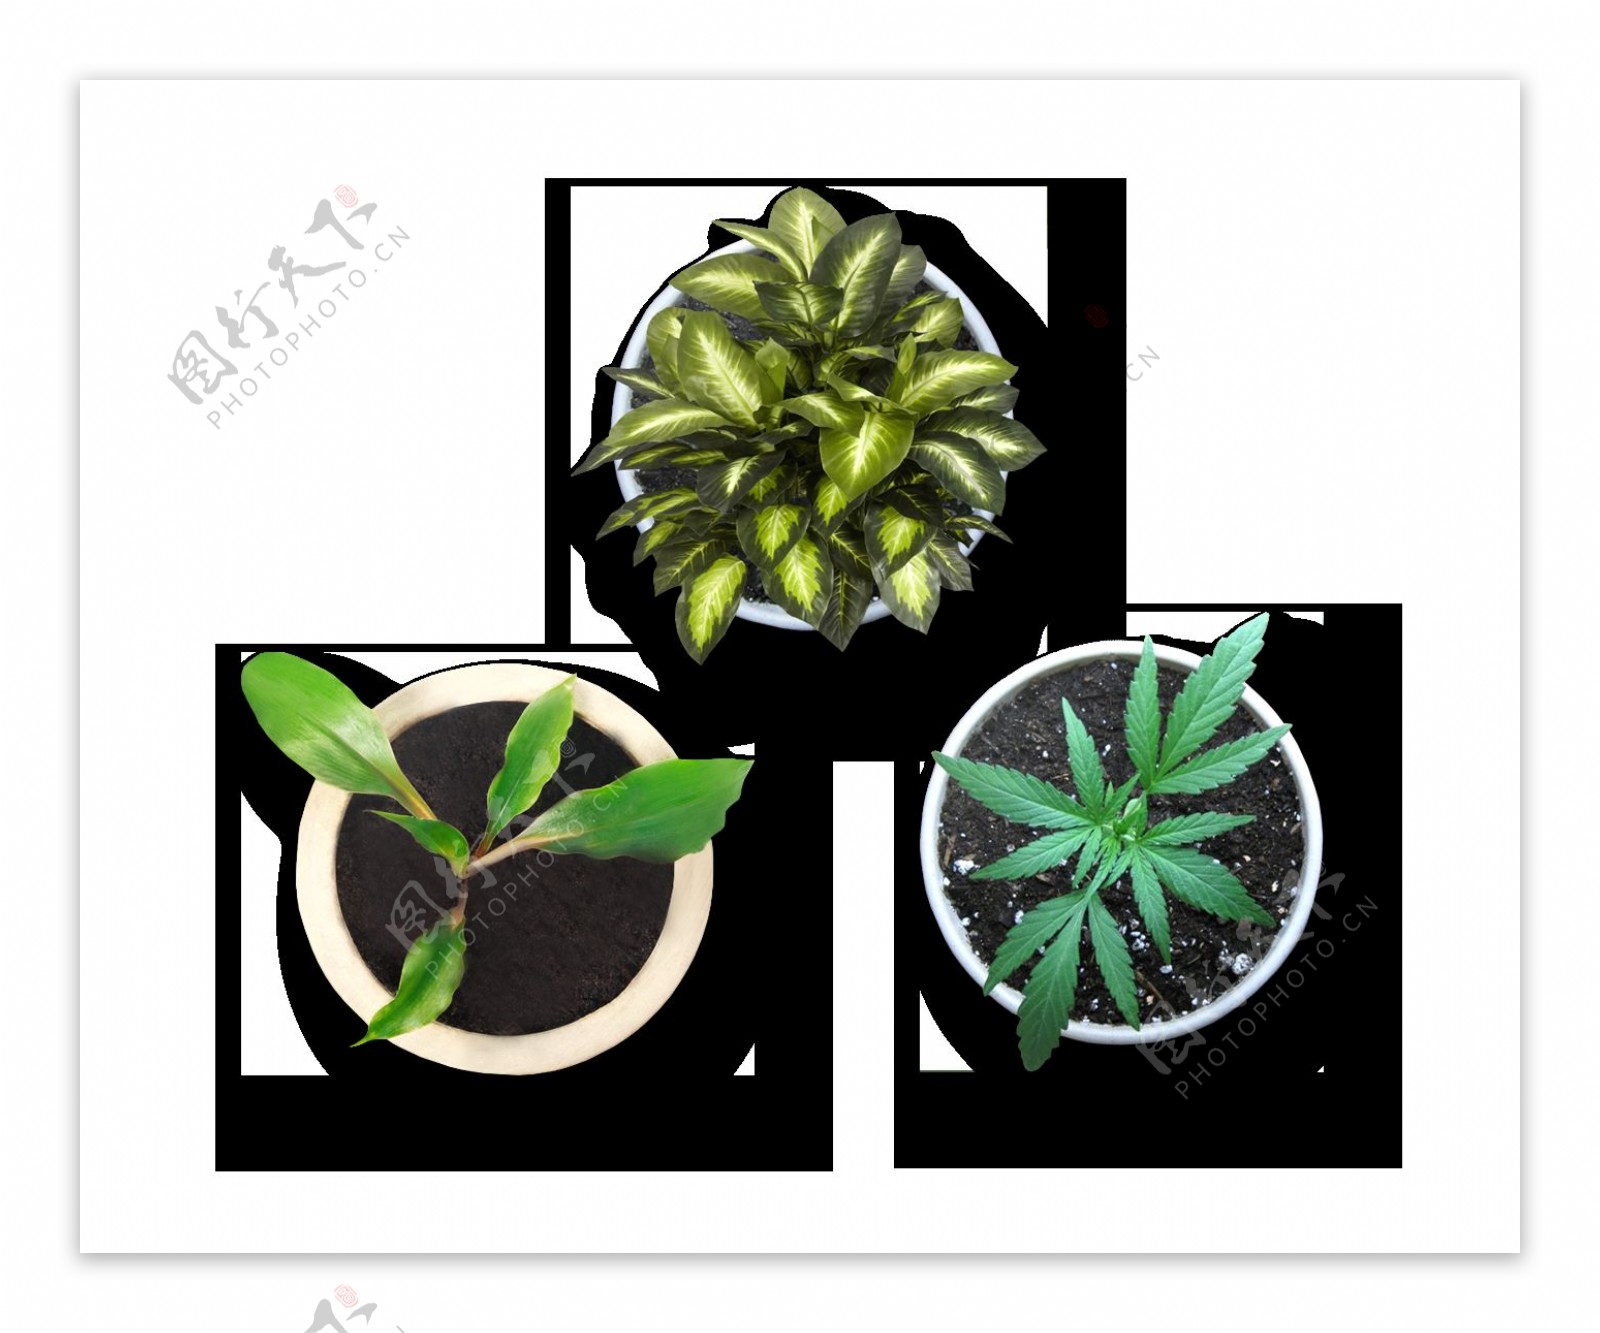 绿色盆栽植物png元素